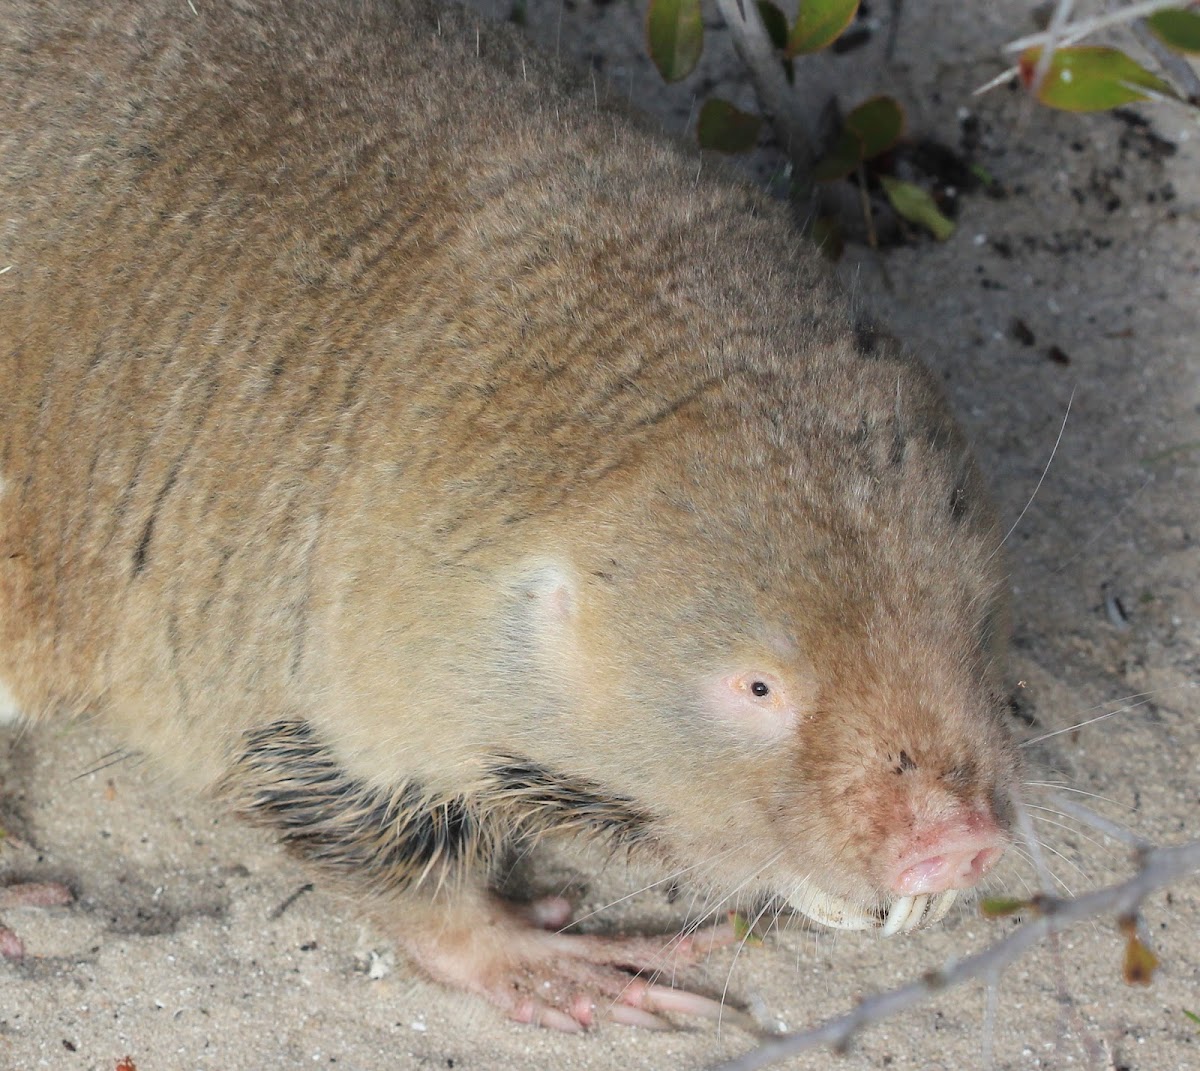 Cape dune mole-rat